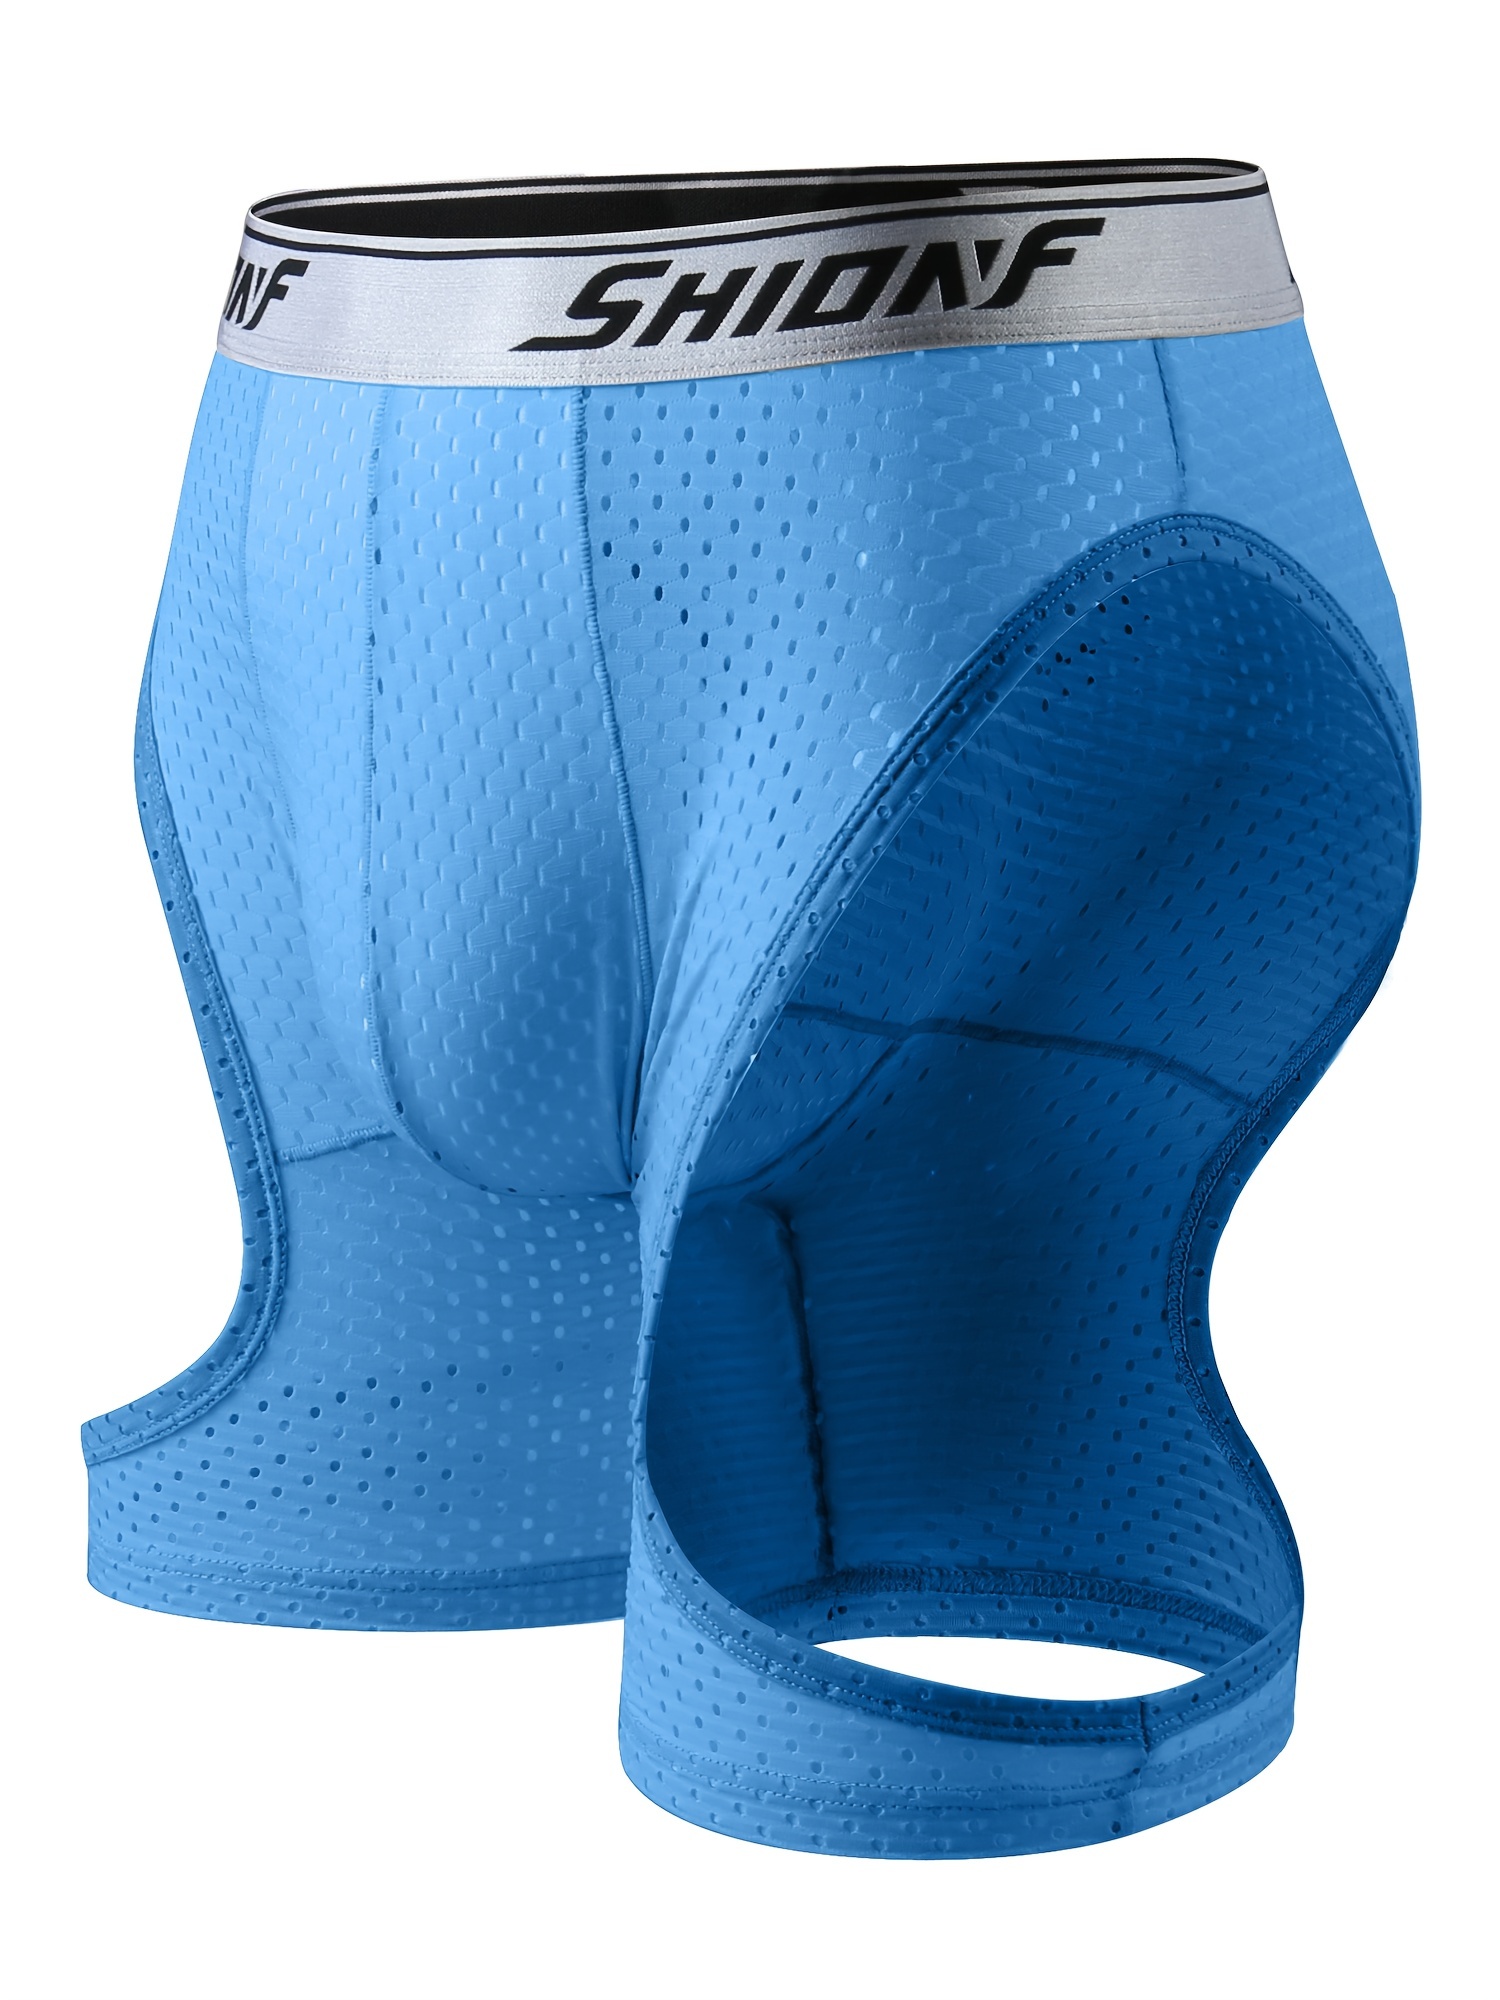 Tight Underwear For Sports